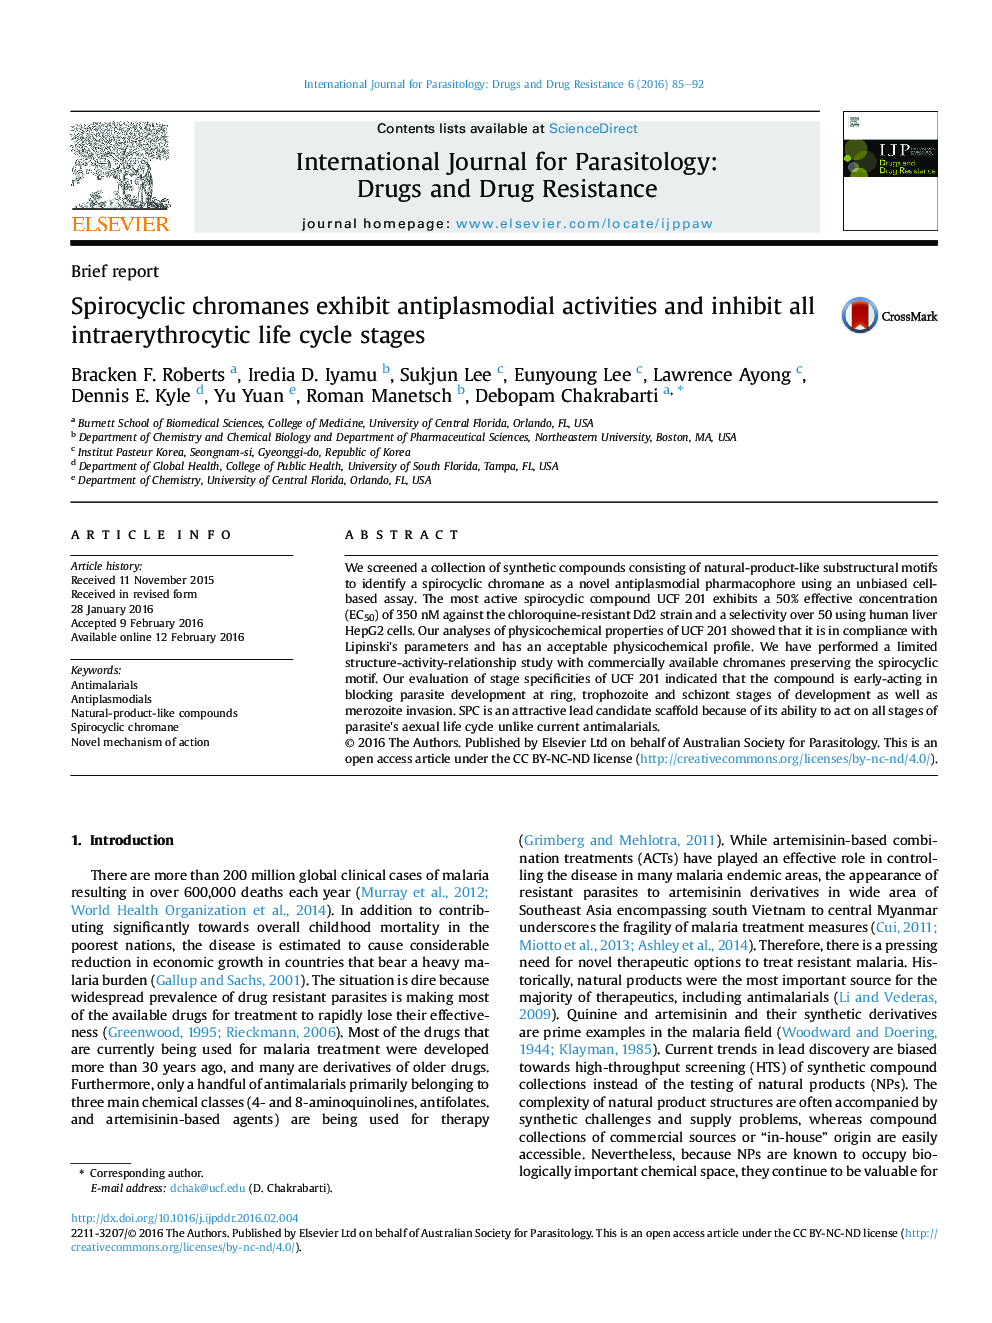 Spirocyclic chromanes exhibit antiplasmodial activities and inhibit all intraerythrocytic life cycle stages